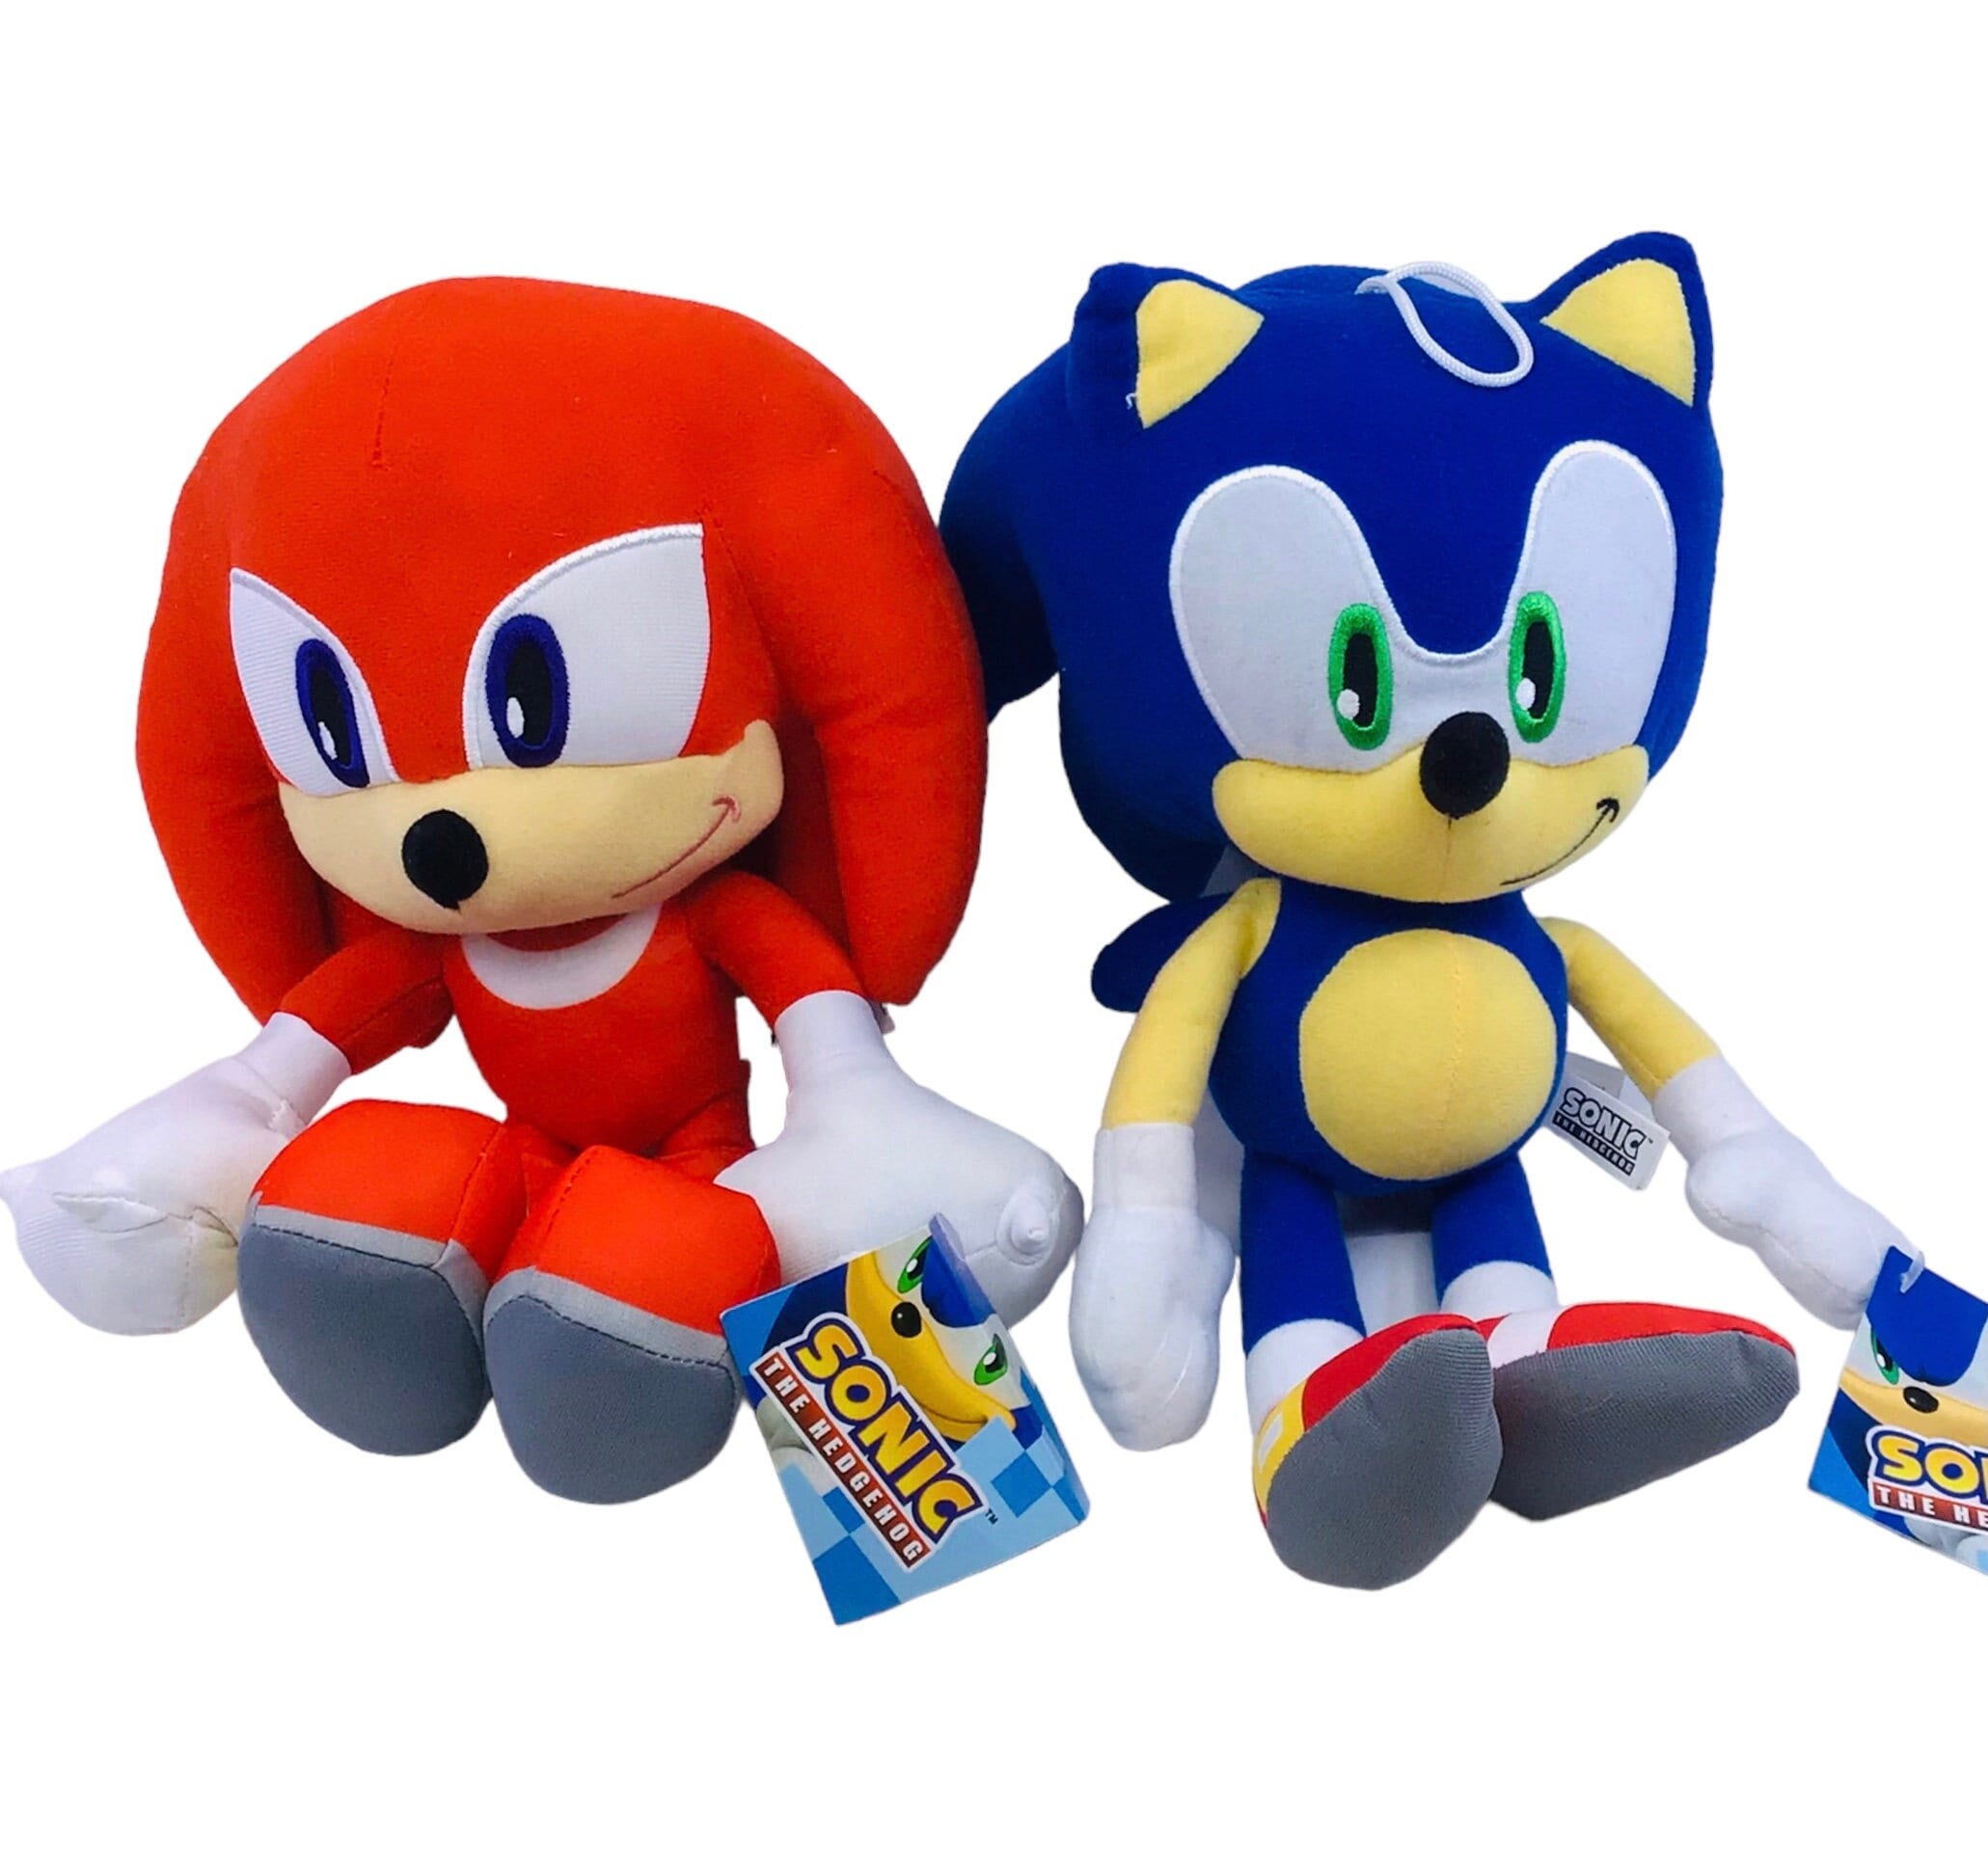 Rare 1996 Sonic the Hedgehog Basket Sonic Plush doll toy SEGA 7 limited